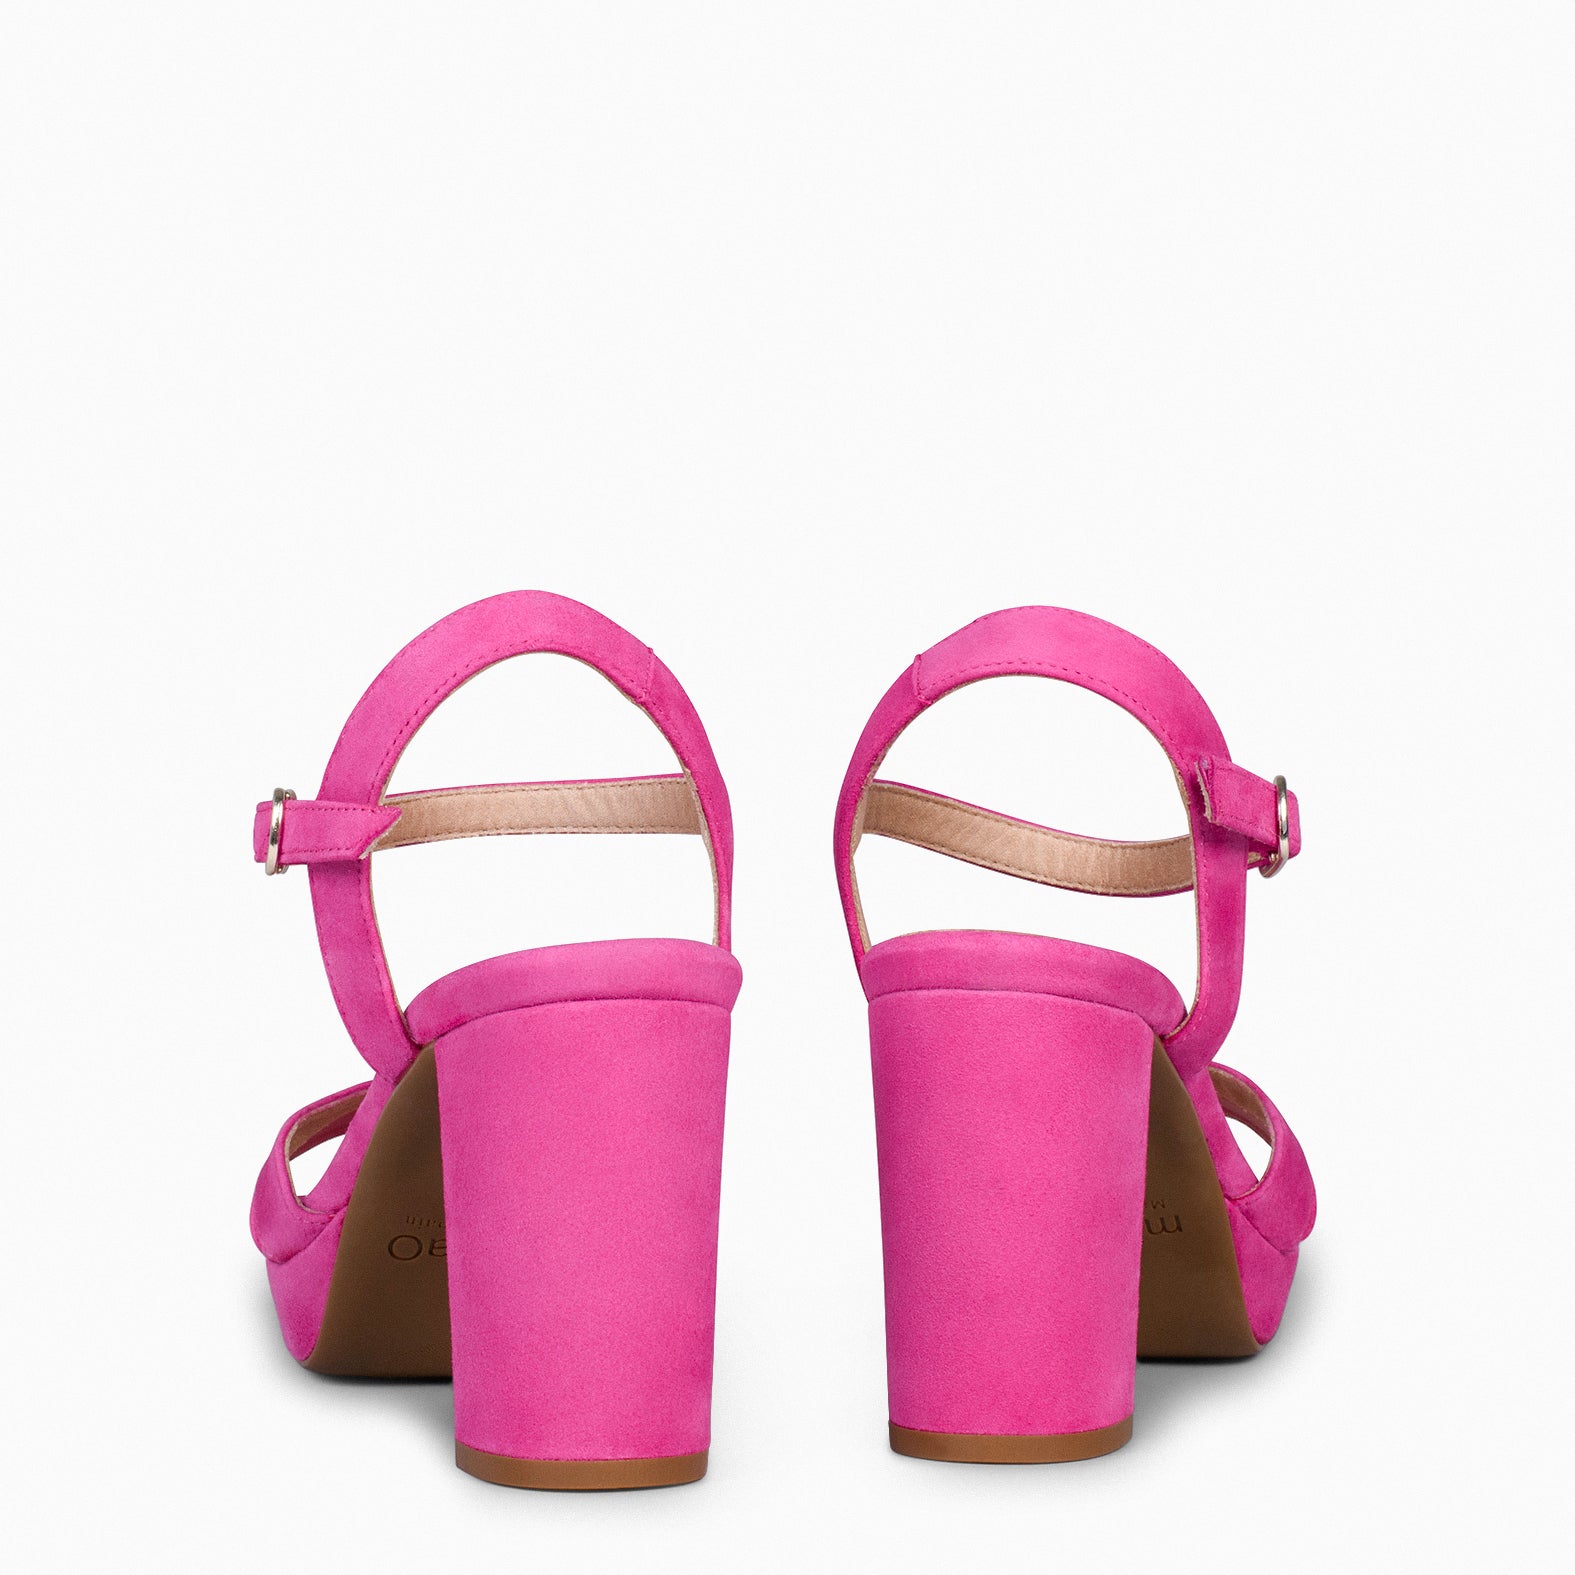 PARIS – PINK high heel sandal with platform